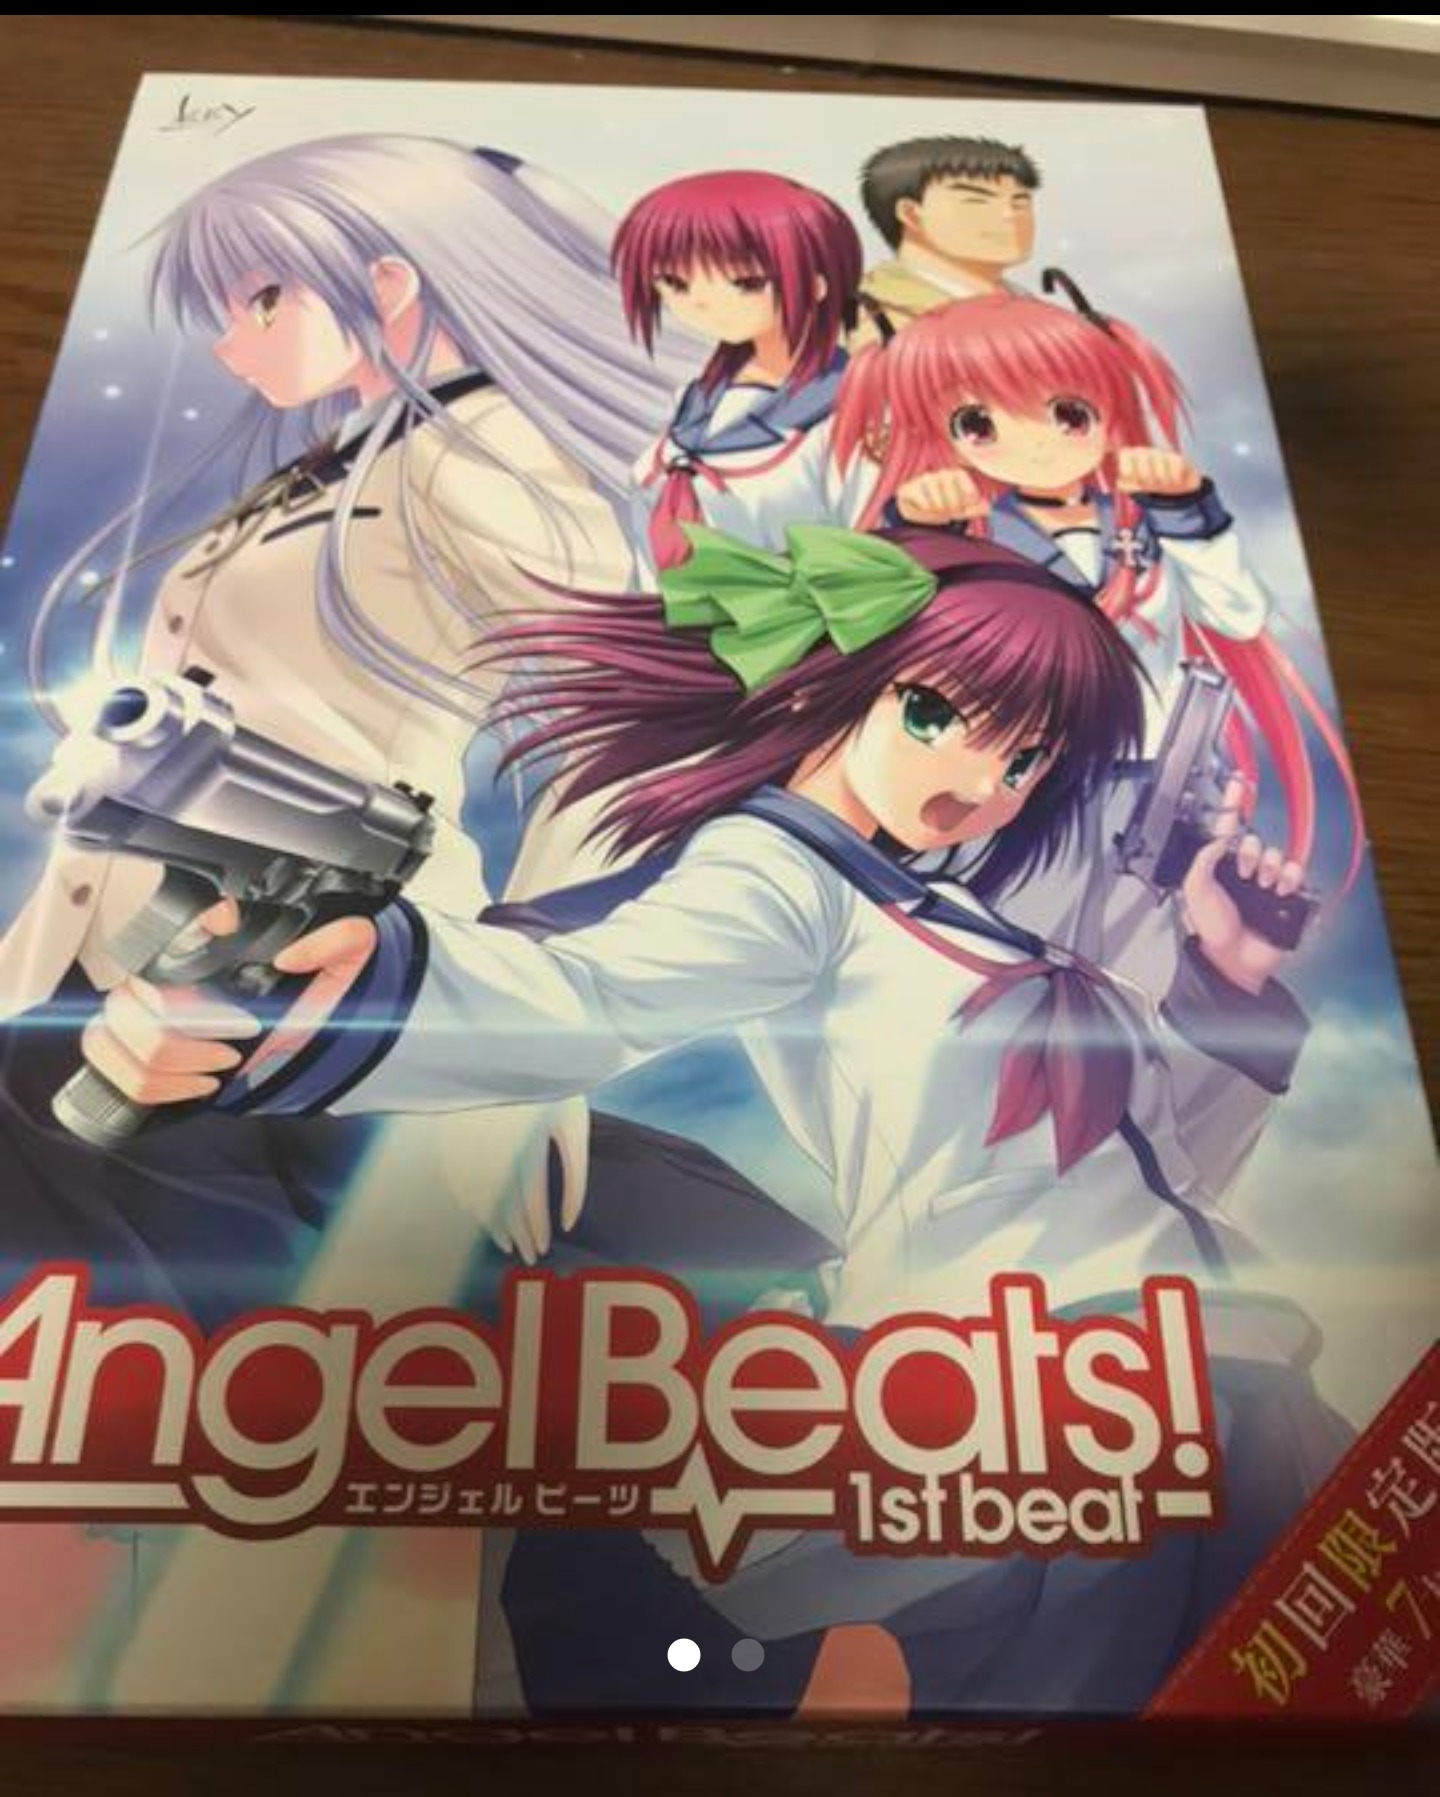 Angel Beats 1st Beat first Press Edition | Request Details